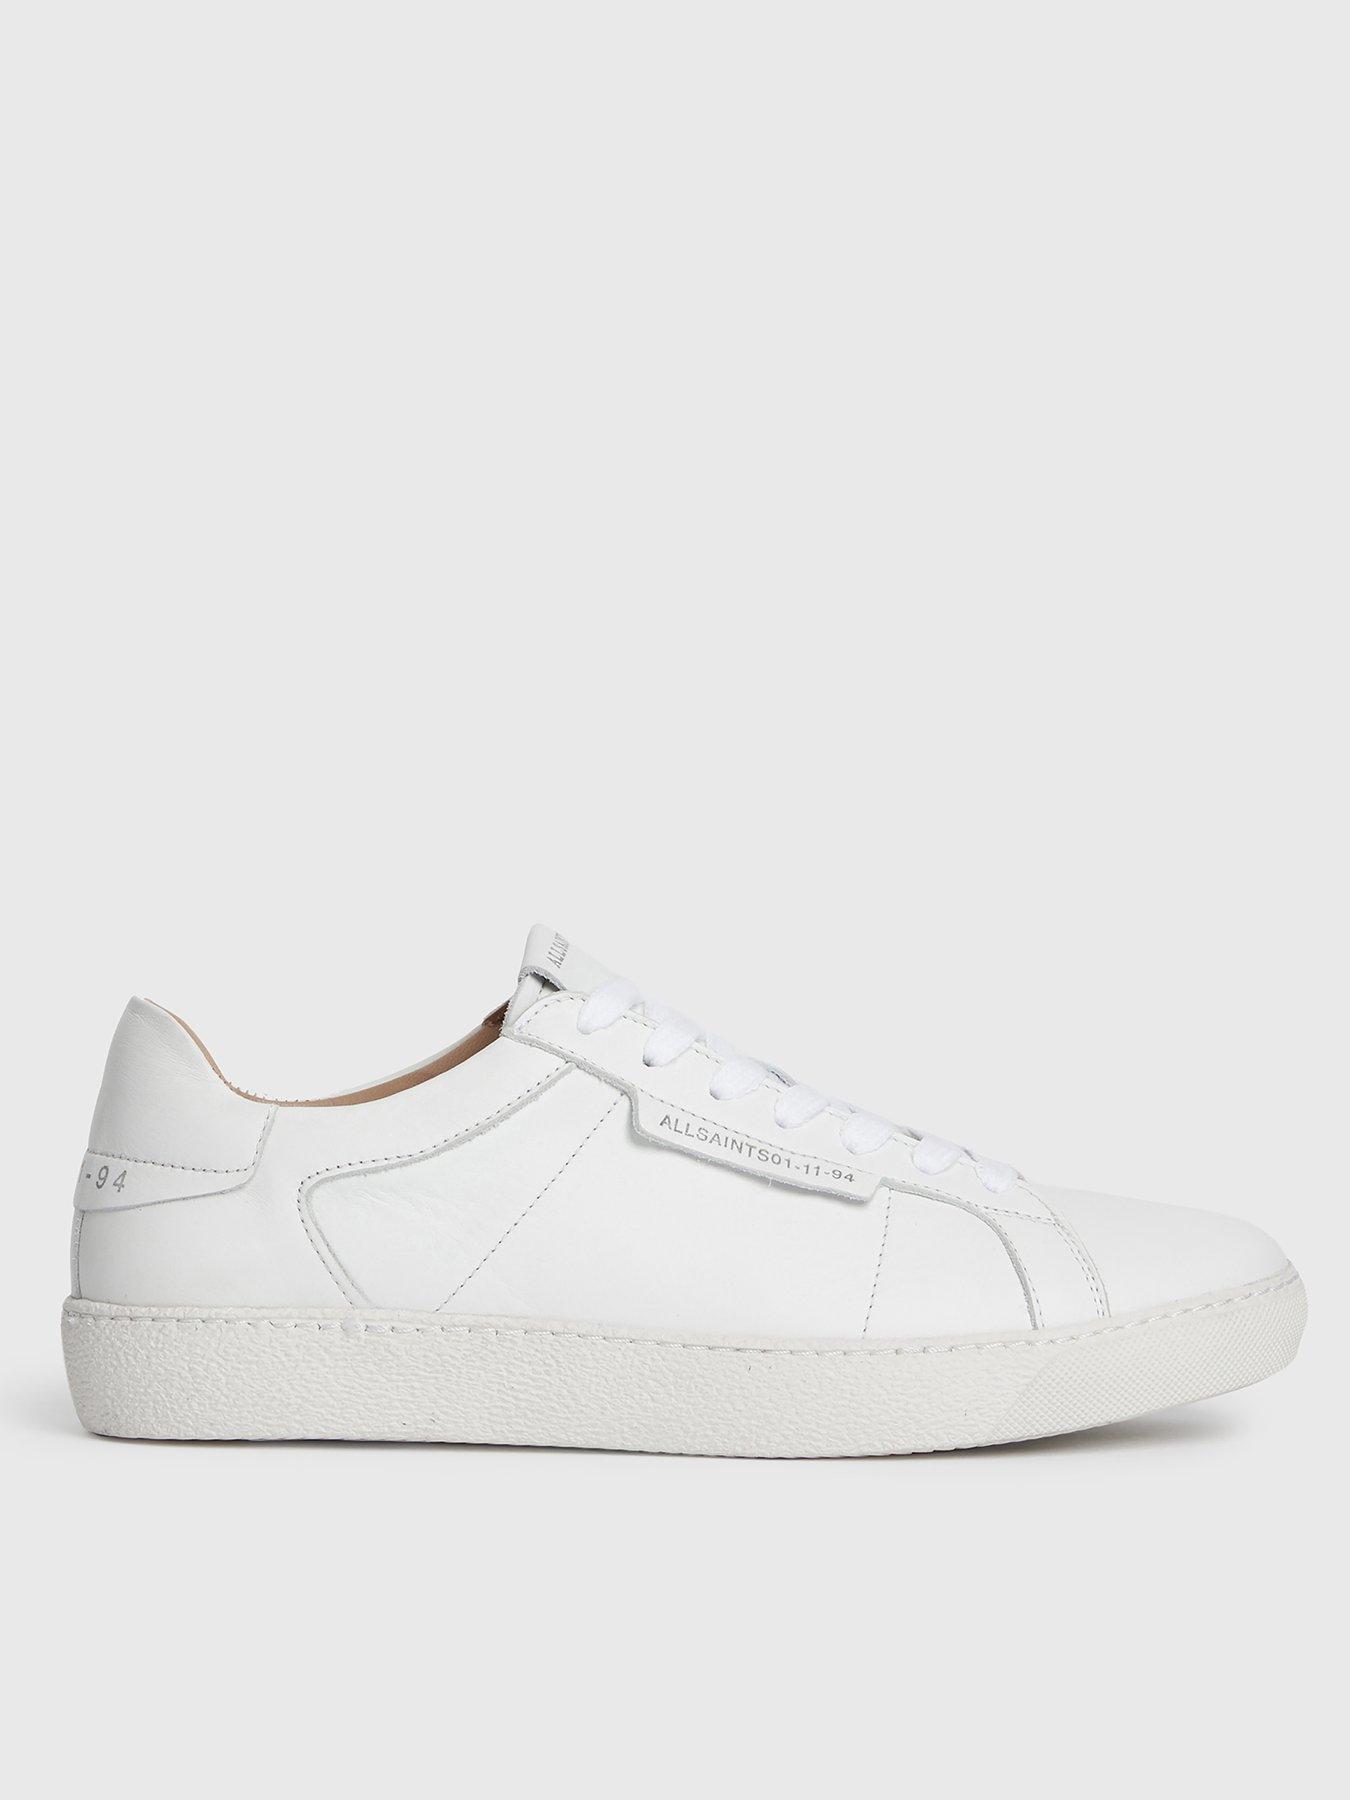 AllSaints Sheer Low Top Sneaker - White | very.co.uk